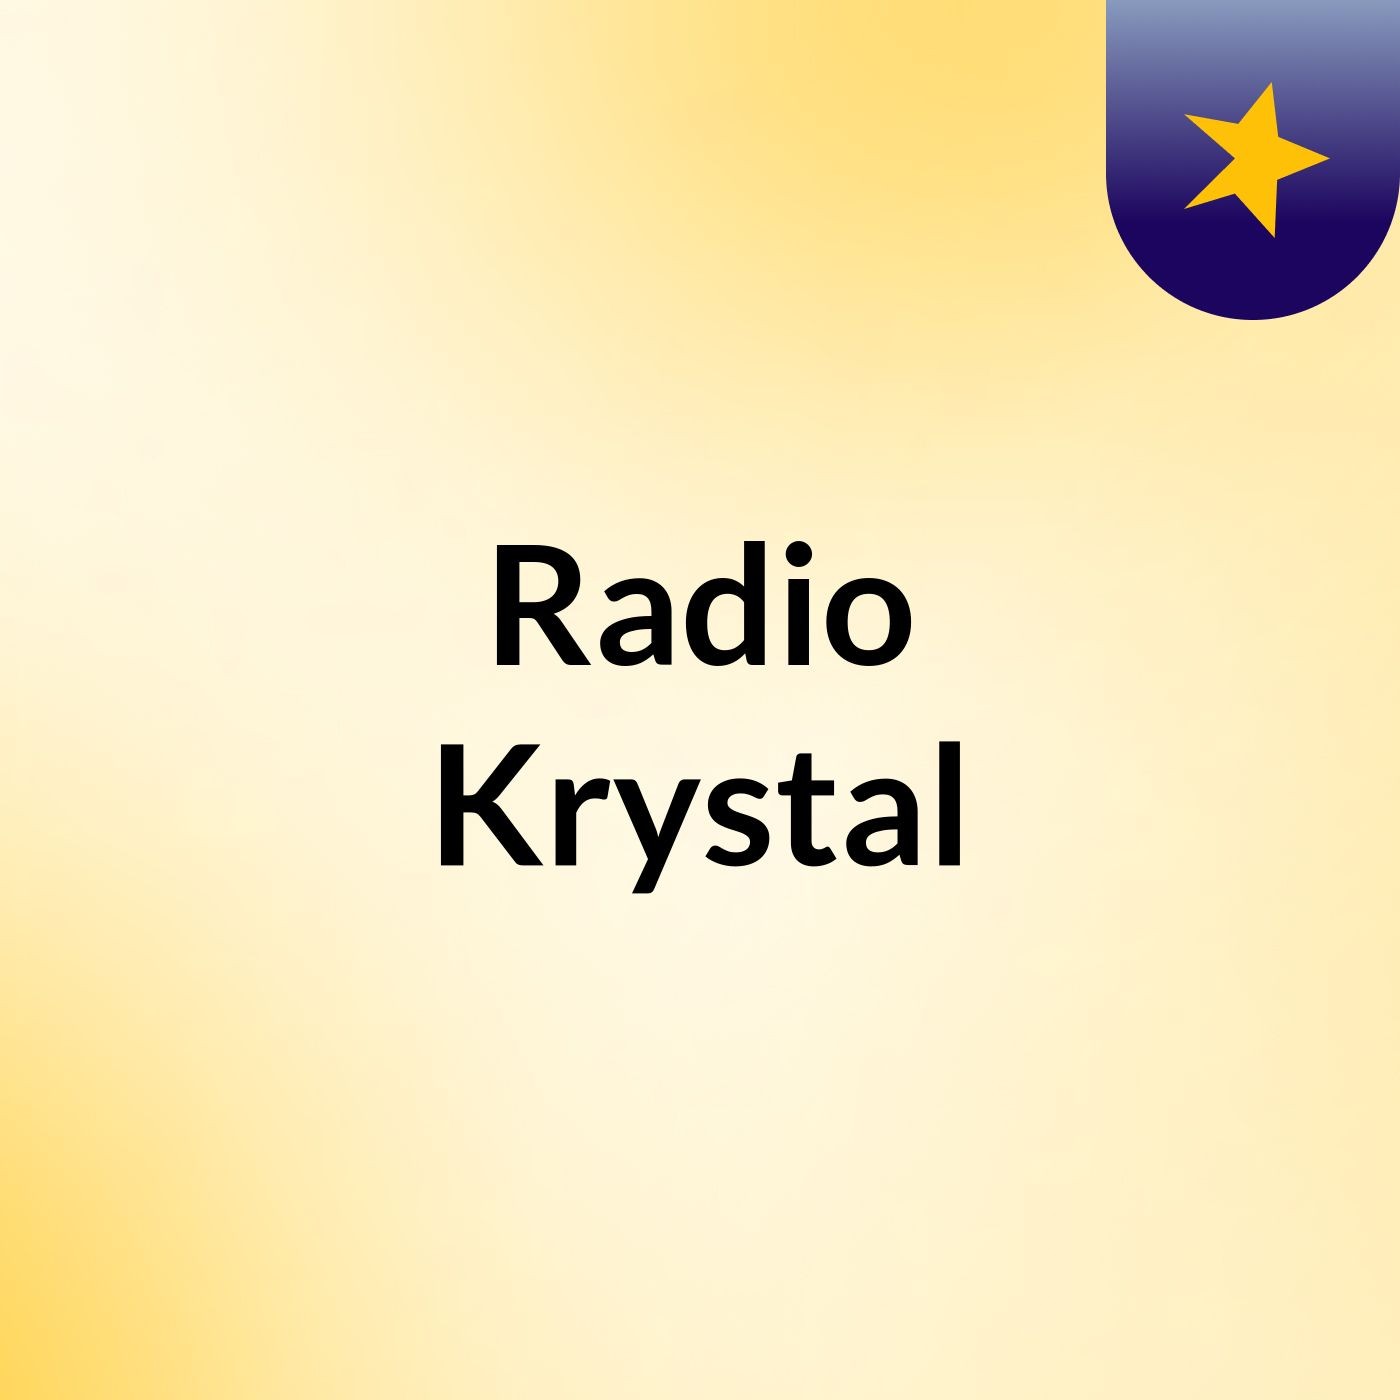 Wasssup World Radio Krystal